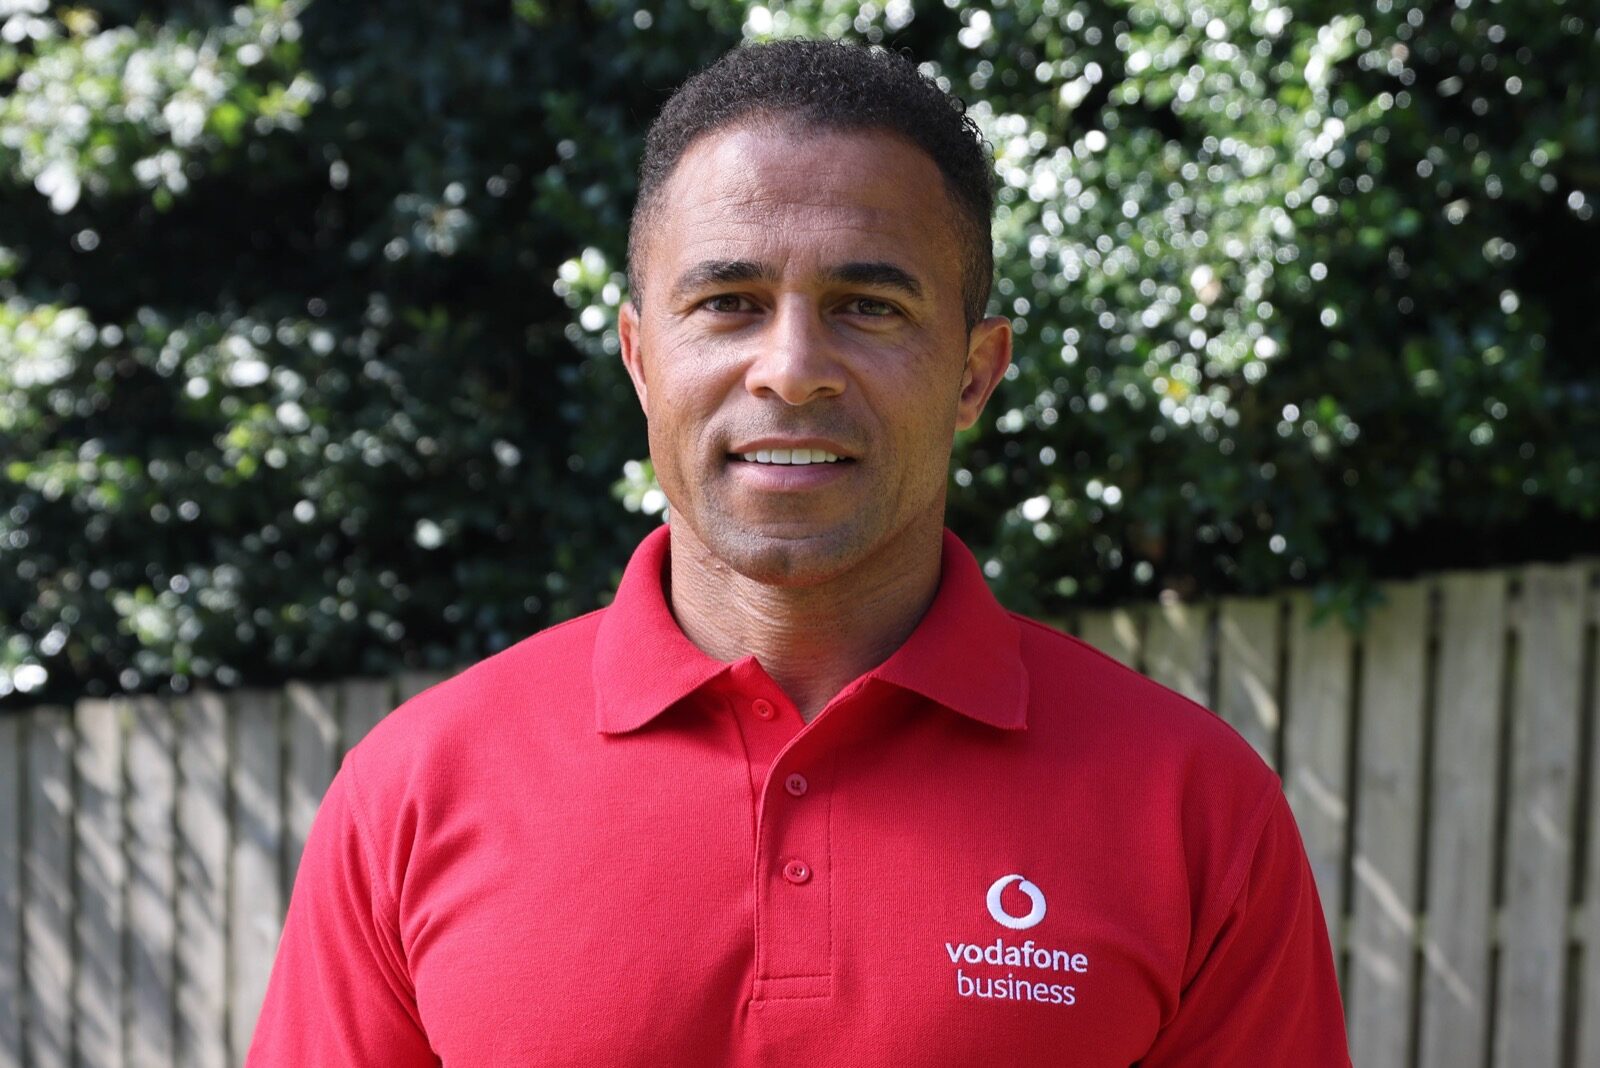 photo of James Robinson outside wearing a Vodafone polo shirt